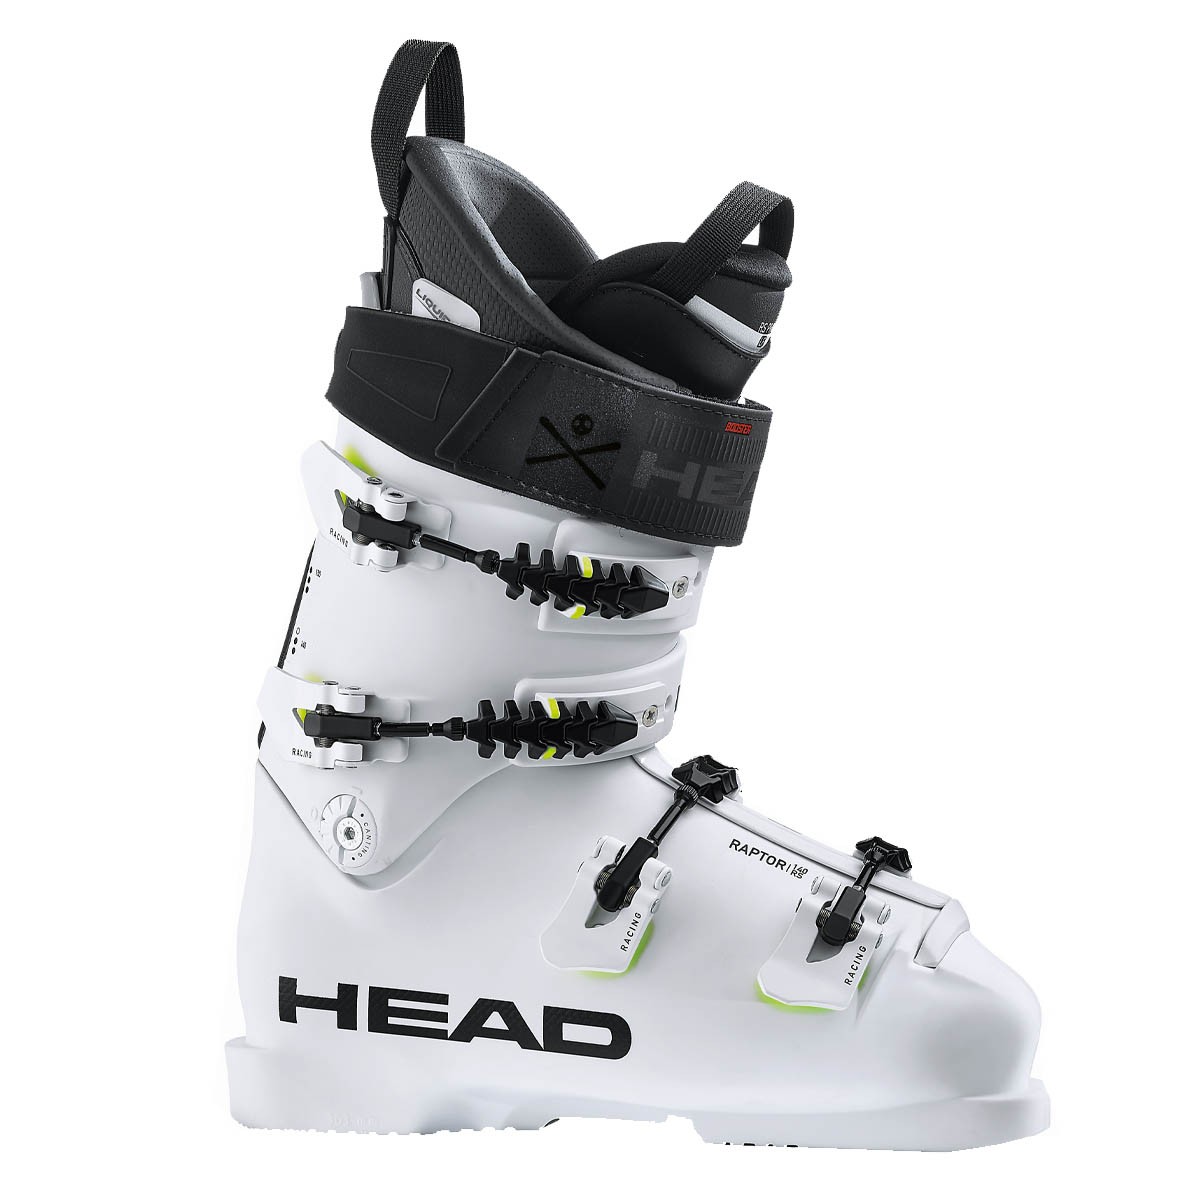 Scarponi ERTL-Renz By Head flex 130 scarpone sci alpinismo ski boots skiboots 